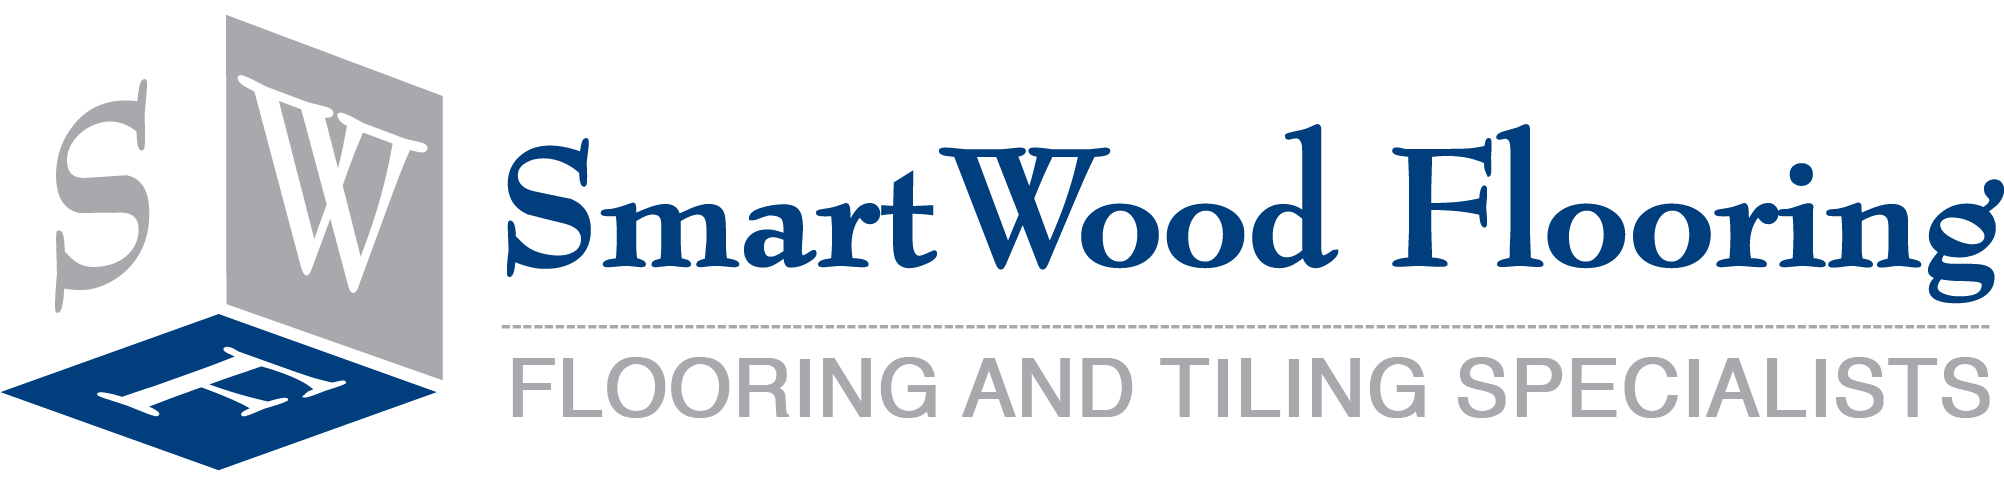 Smartwood Flooring